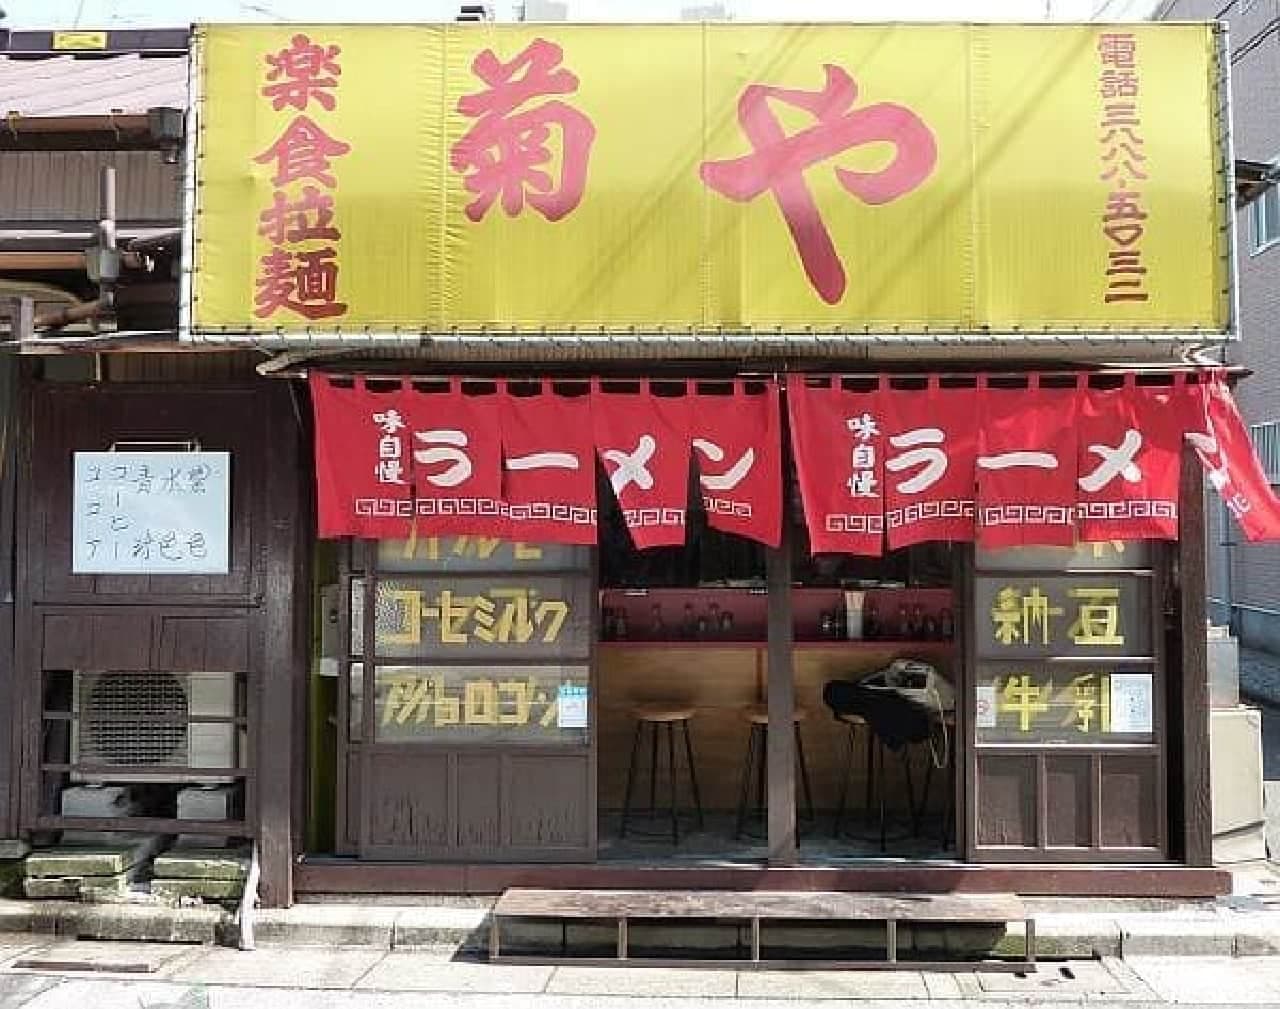 This is Kikuya, a ramen shop in Kitasenju